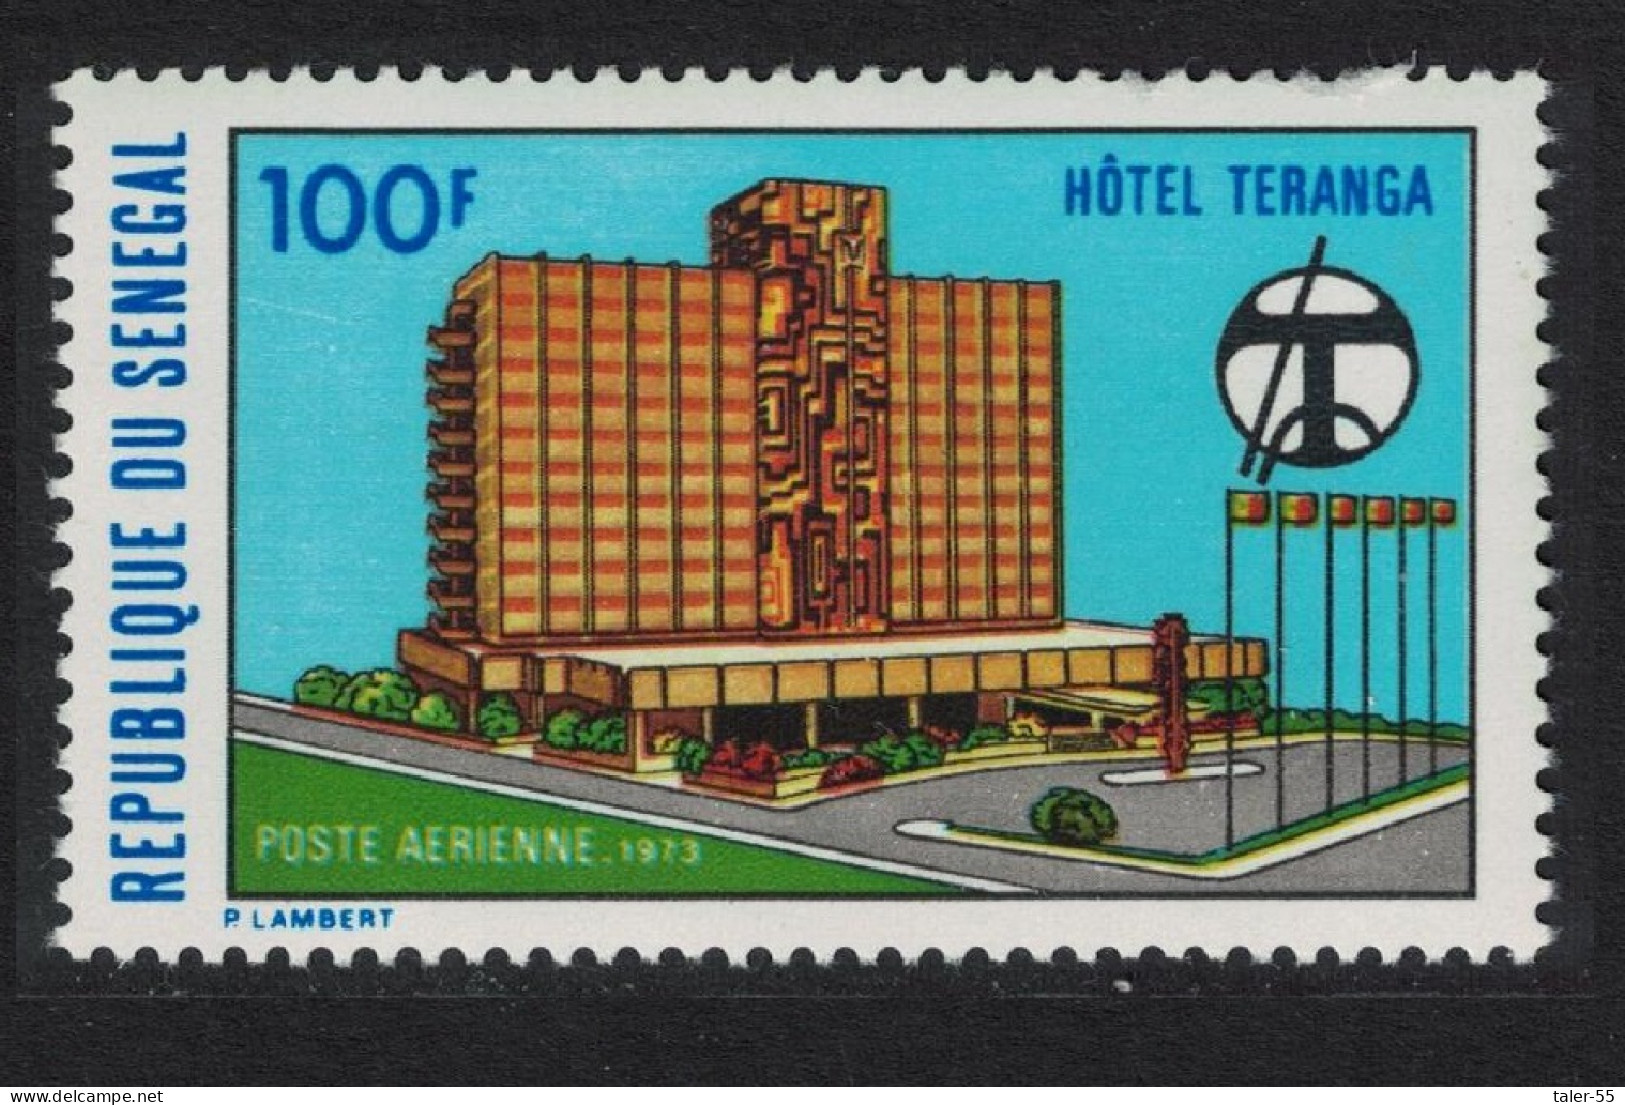 Senegal Opening Of Hotel Teranga Dakar 1973 MNH SG#525 - Senegal (1960-...)